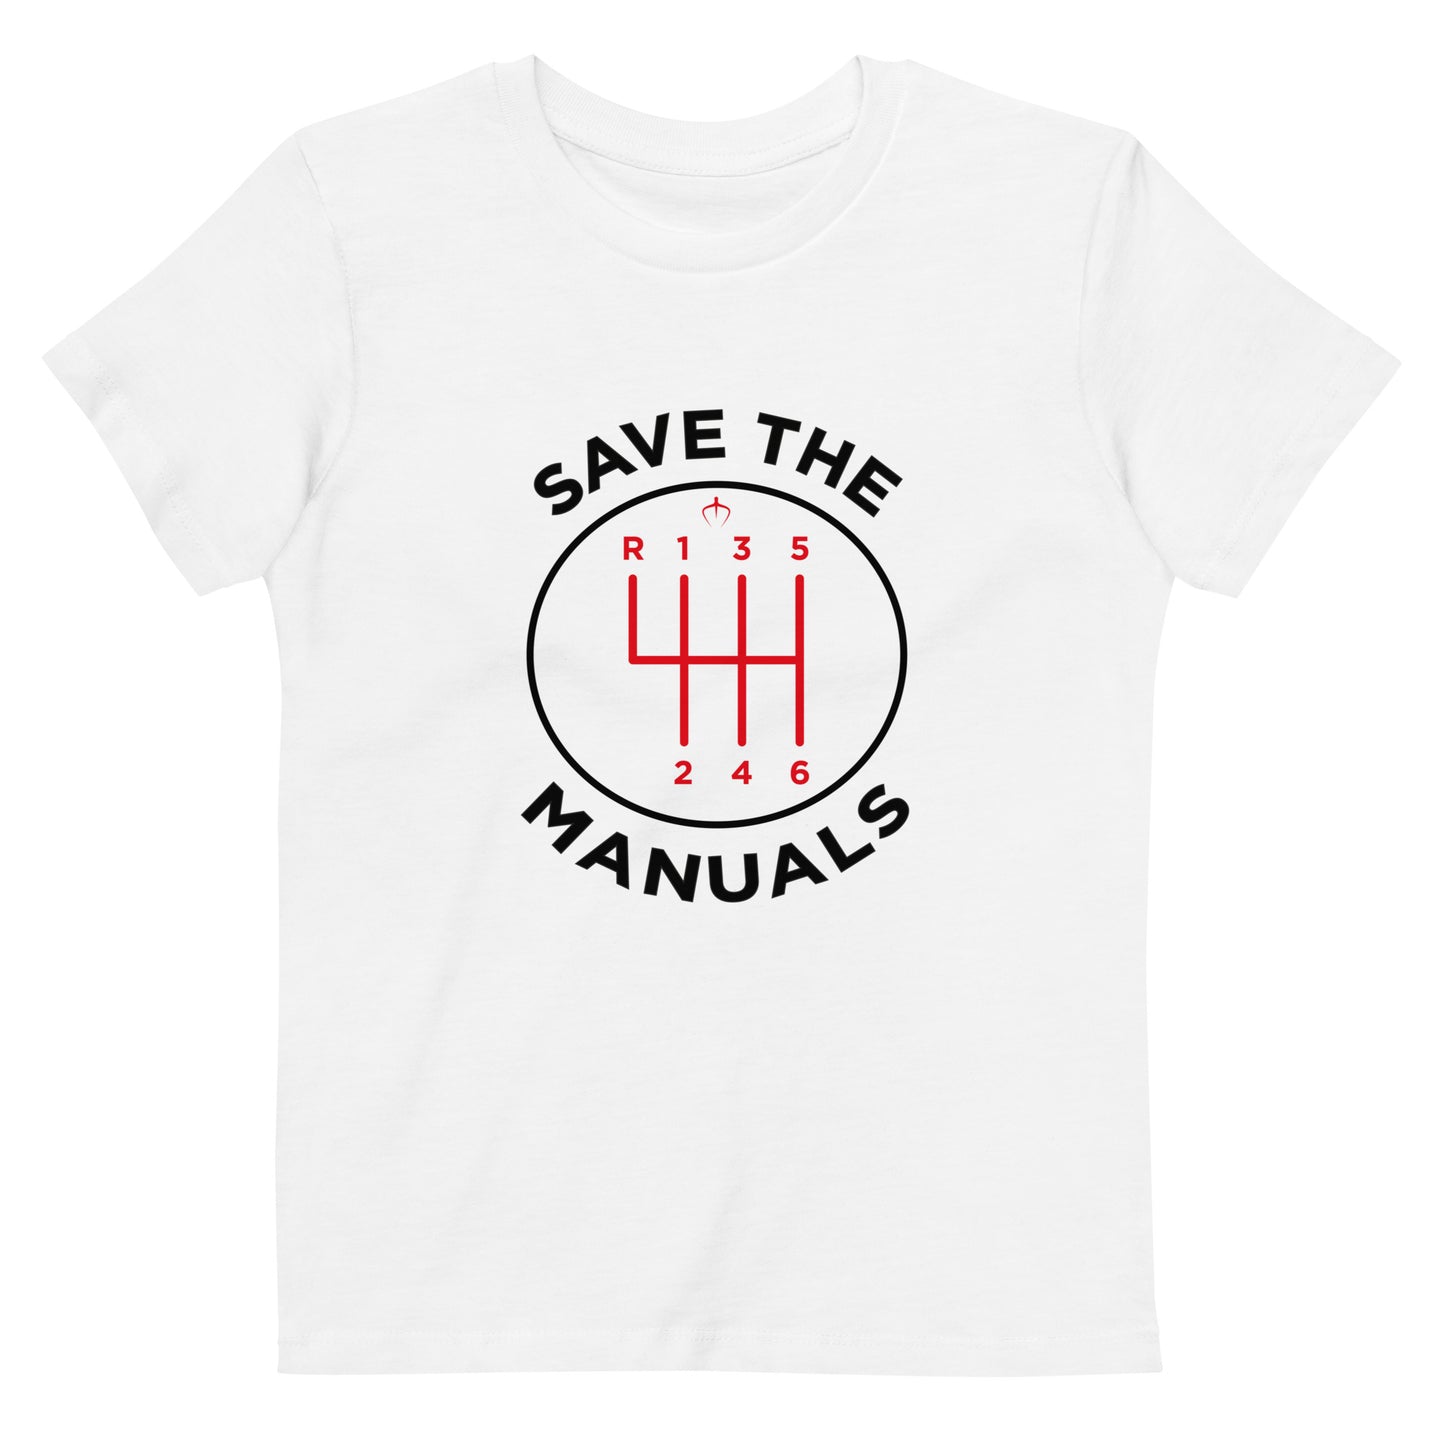 Camiseta kids unisex Save the Manuals "Garage Days" 1 of 100